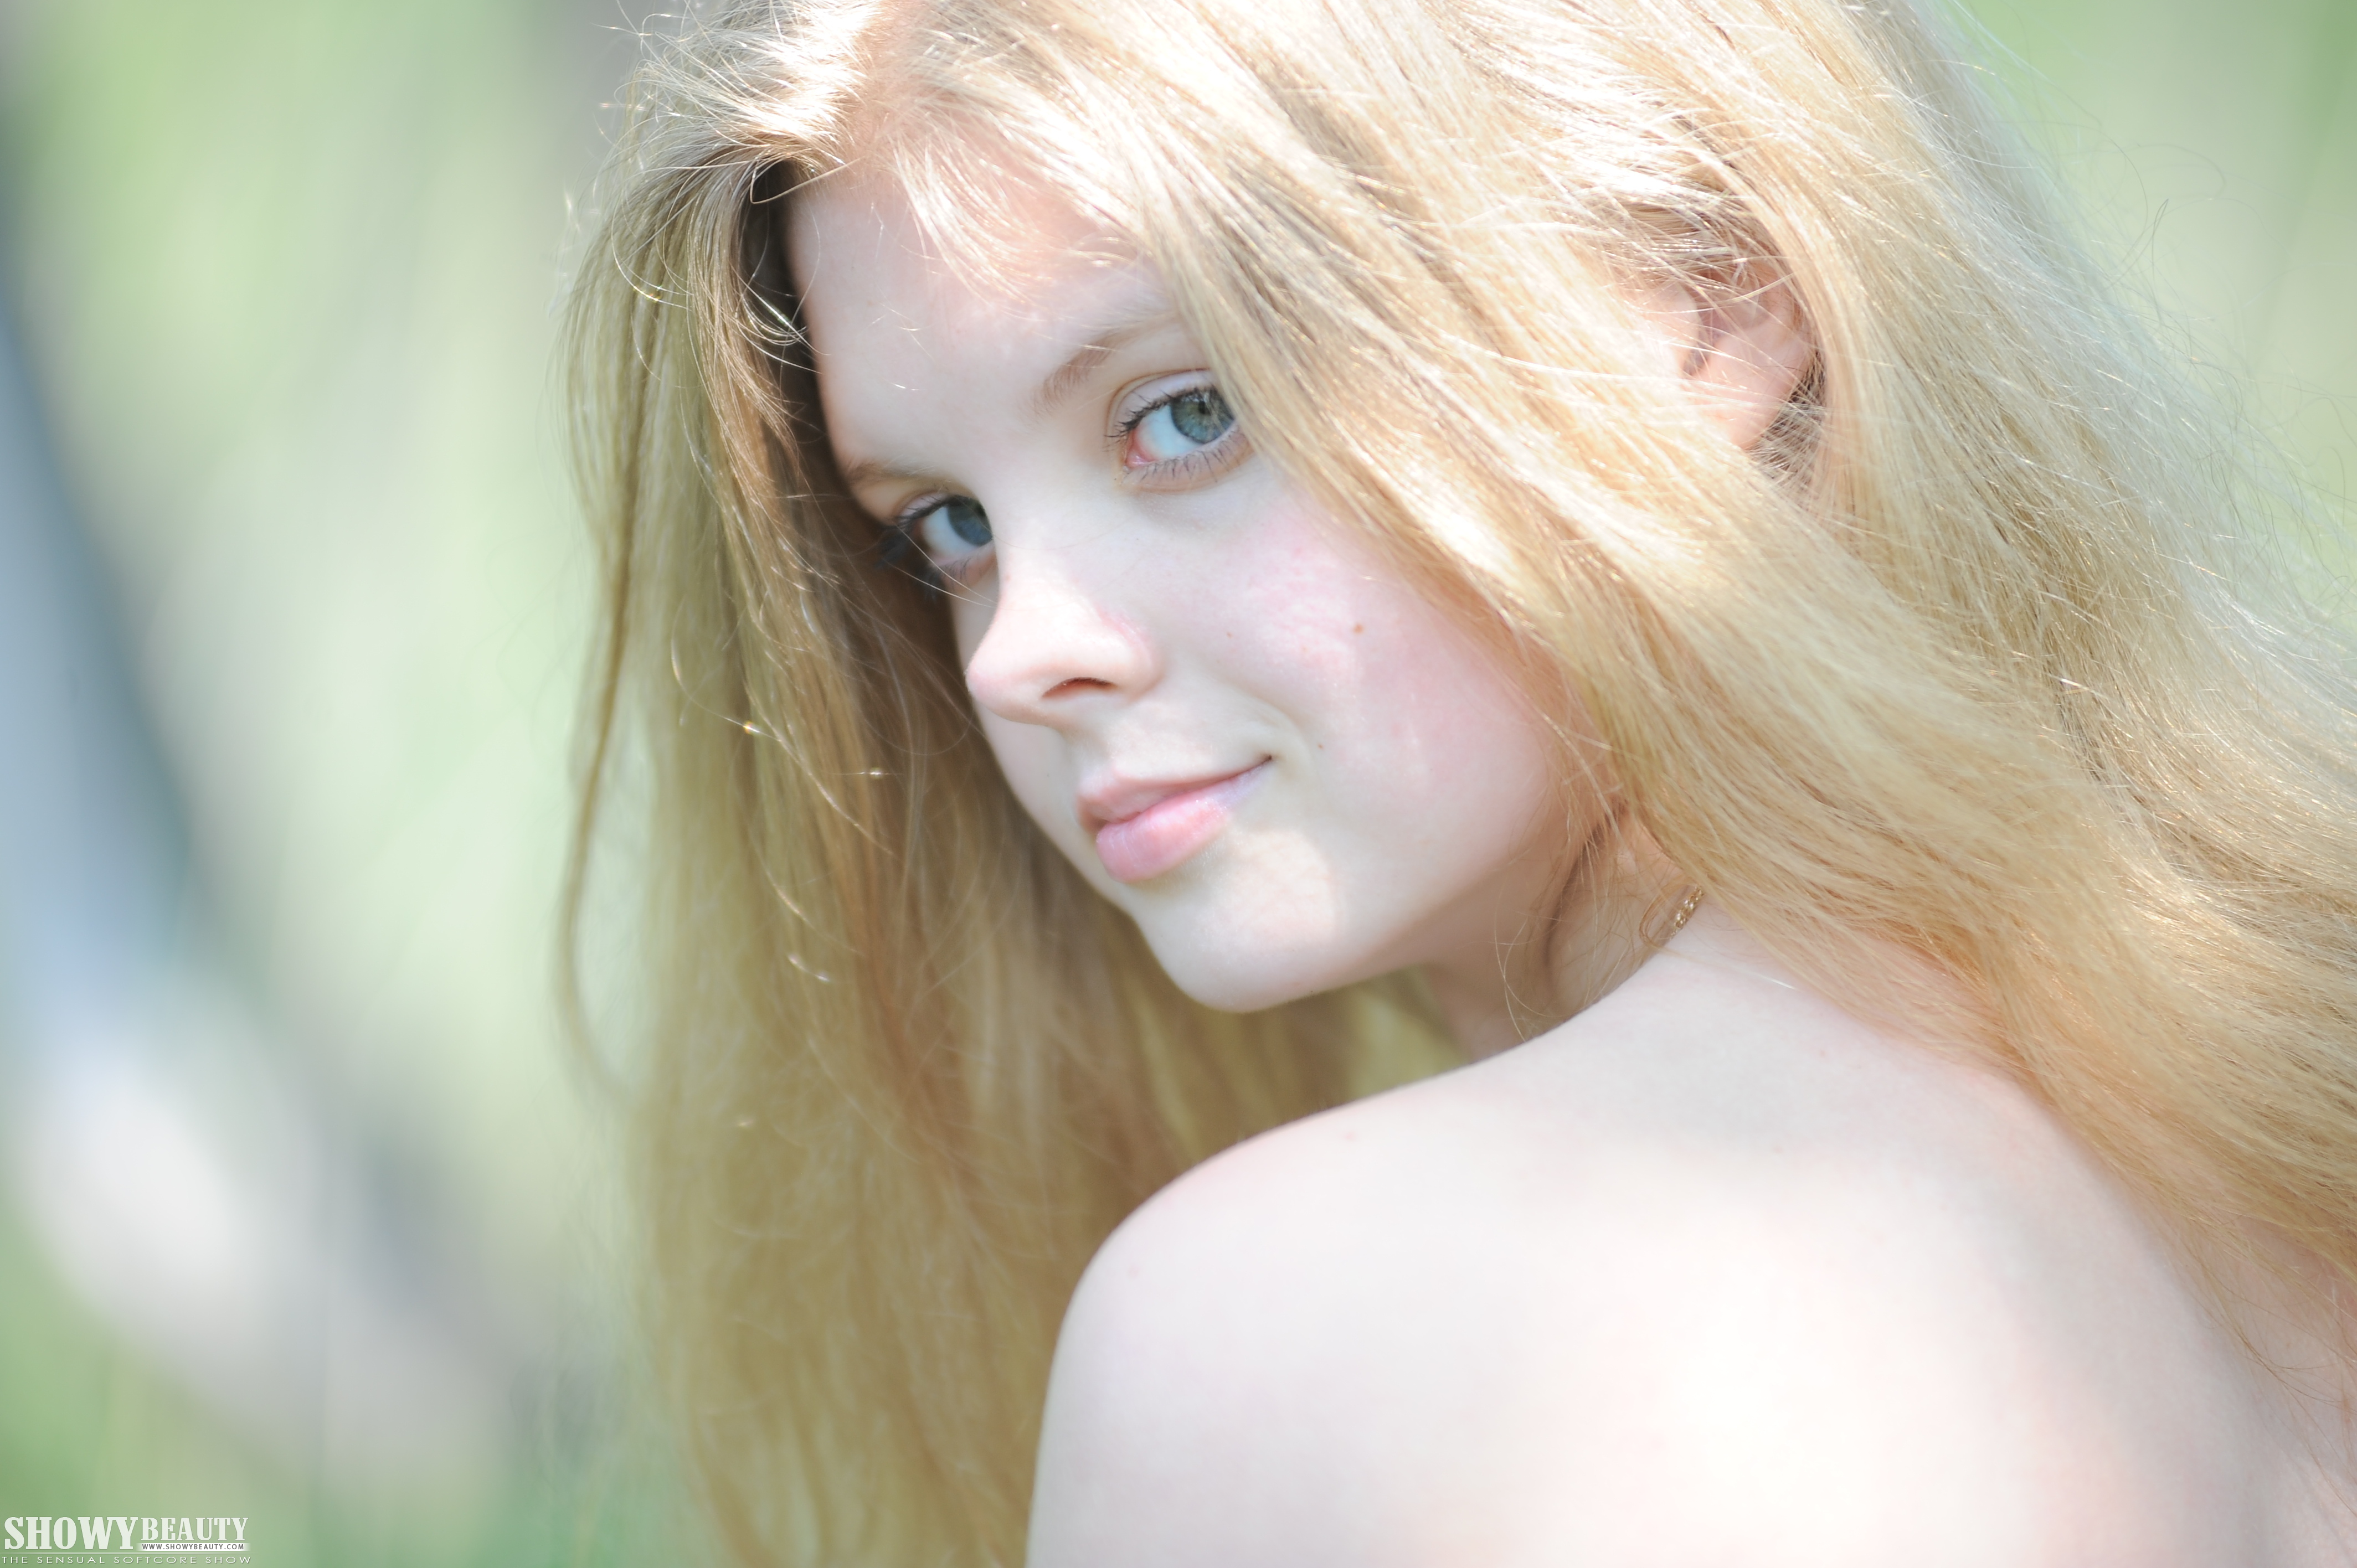 People 4256x2832 Kisa A Showy Beauty nude closeup blonde watermarked Russian Russian women